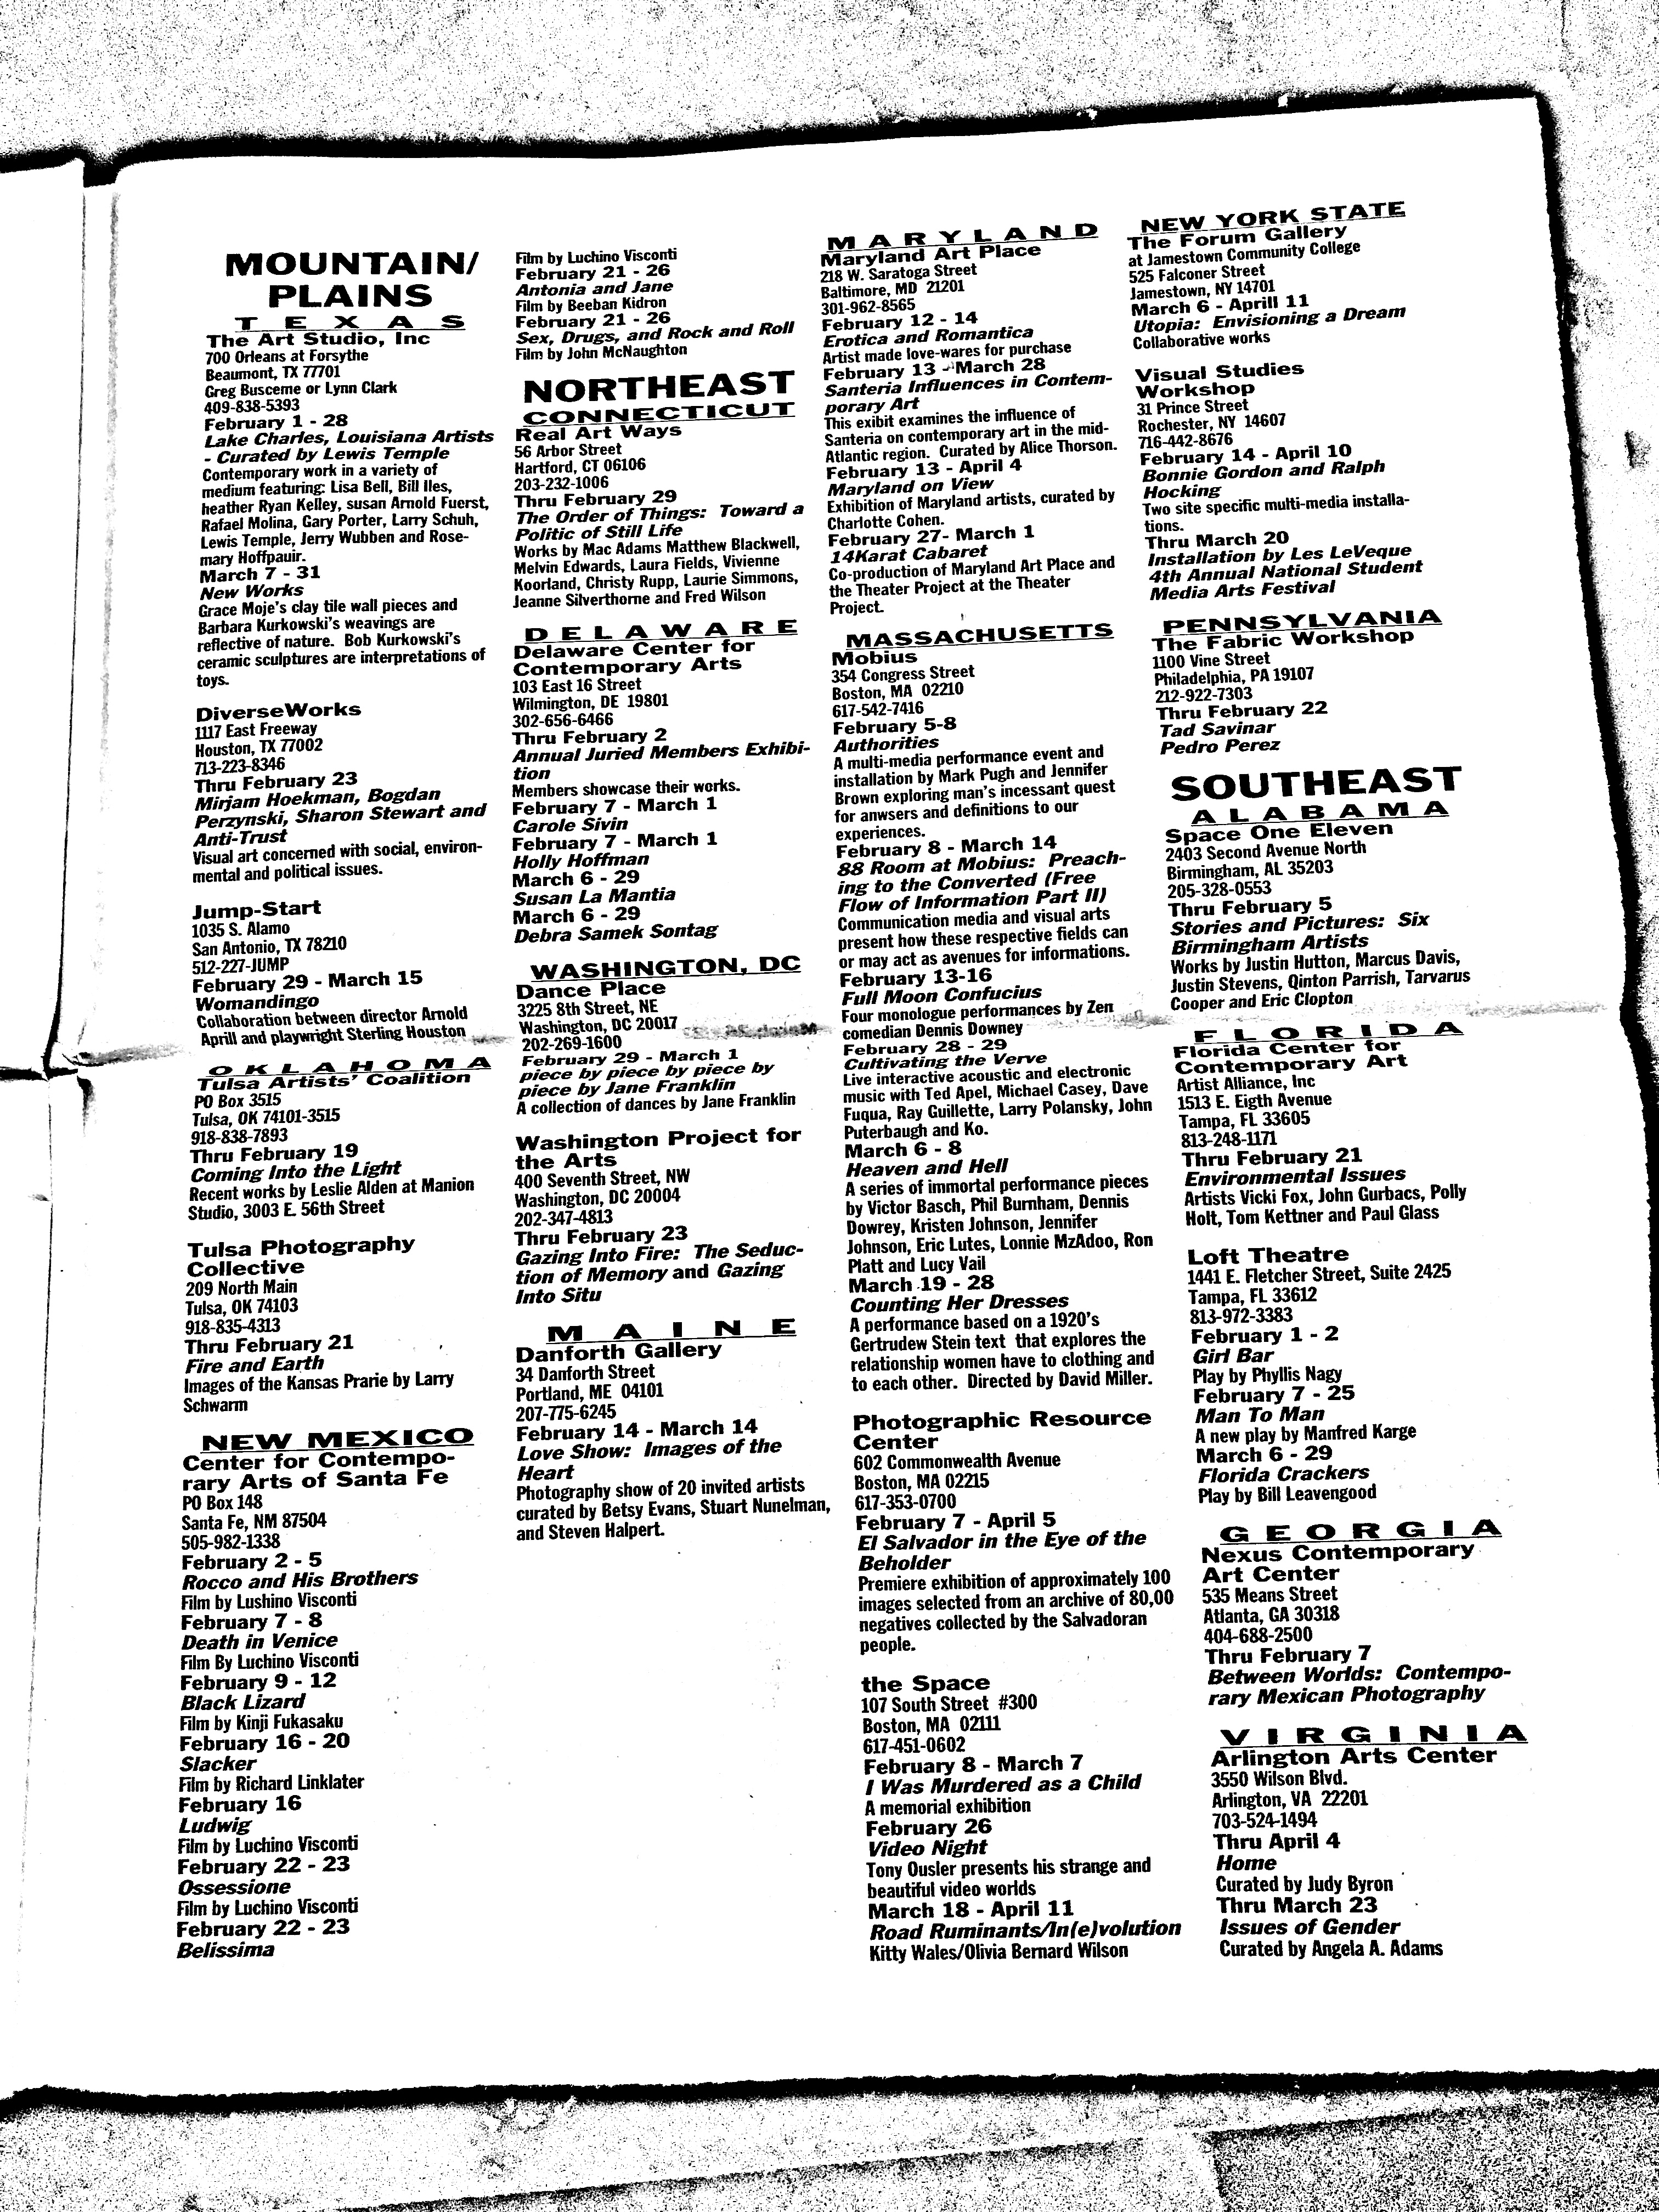 February 1992 - NAAO Bulletin Page 17.jpg